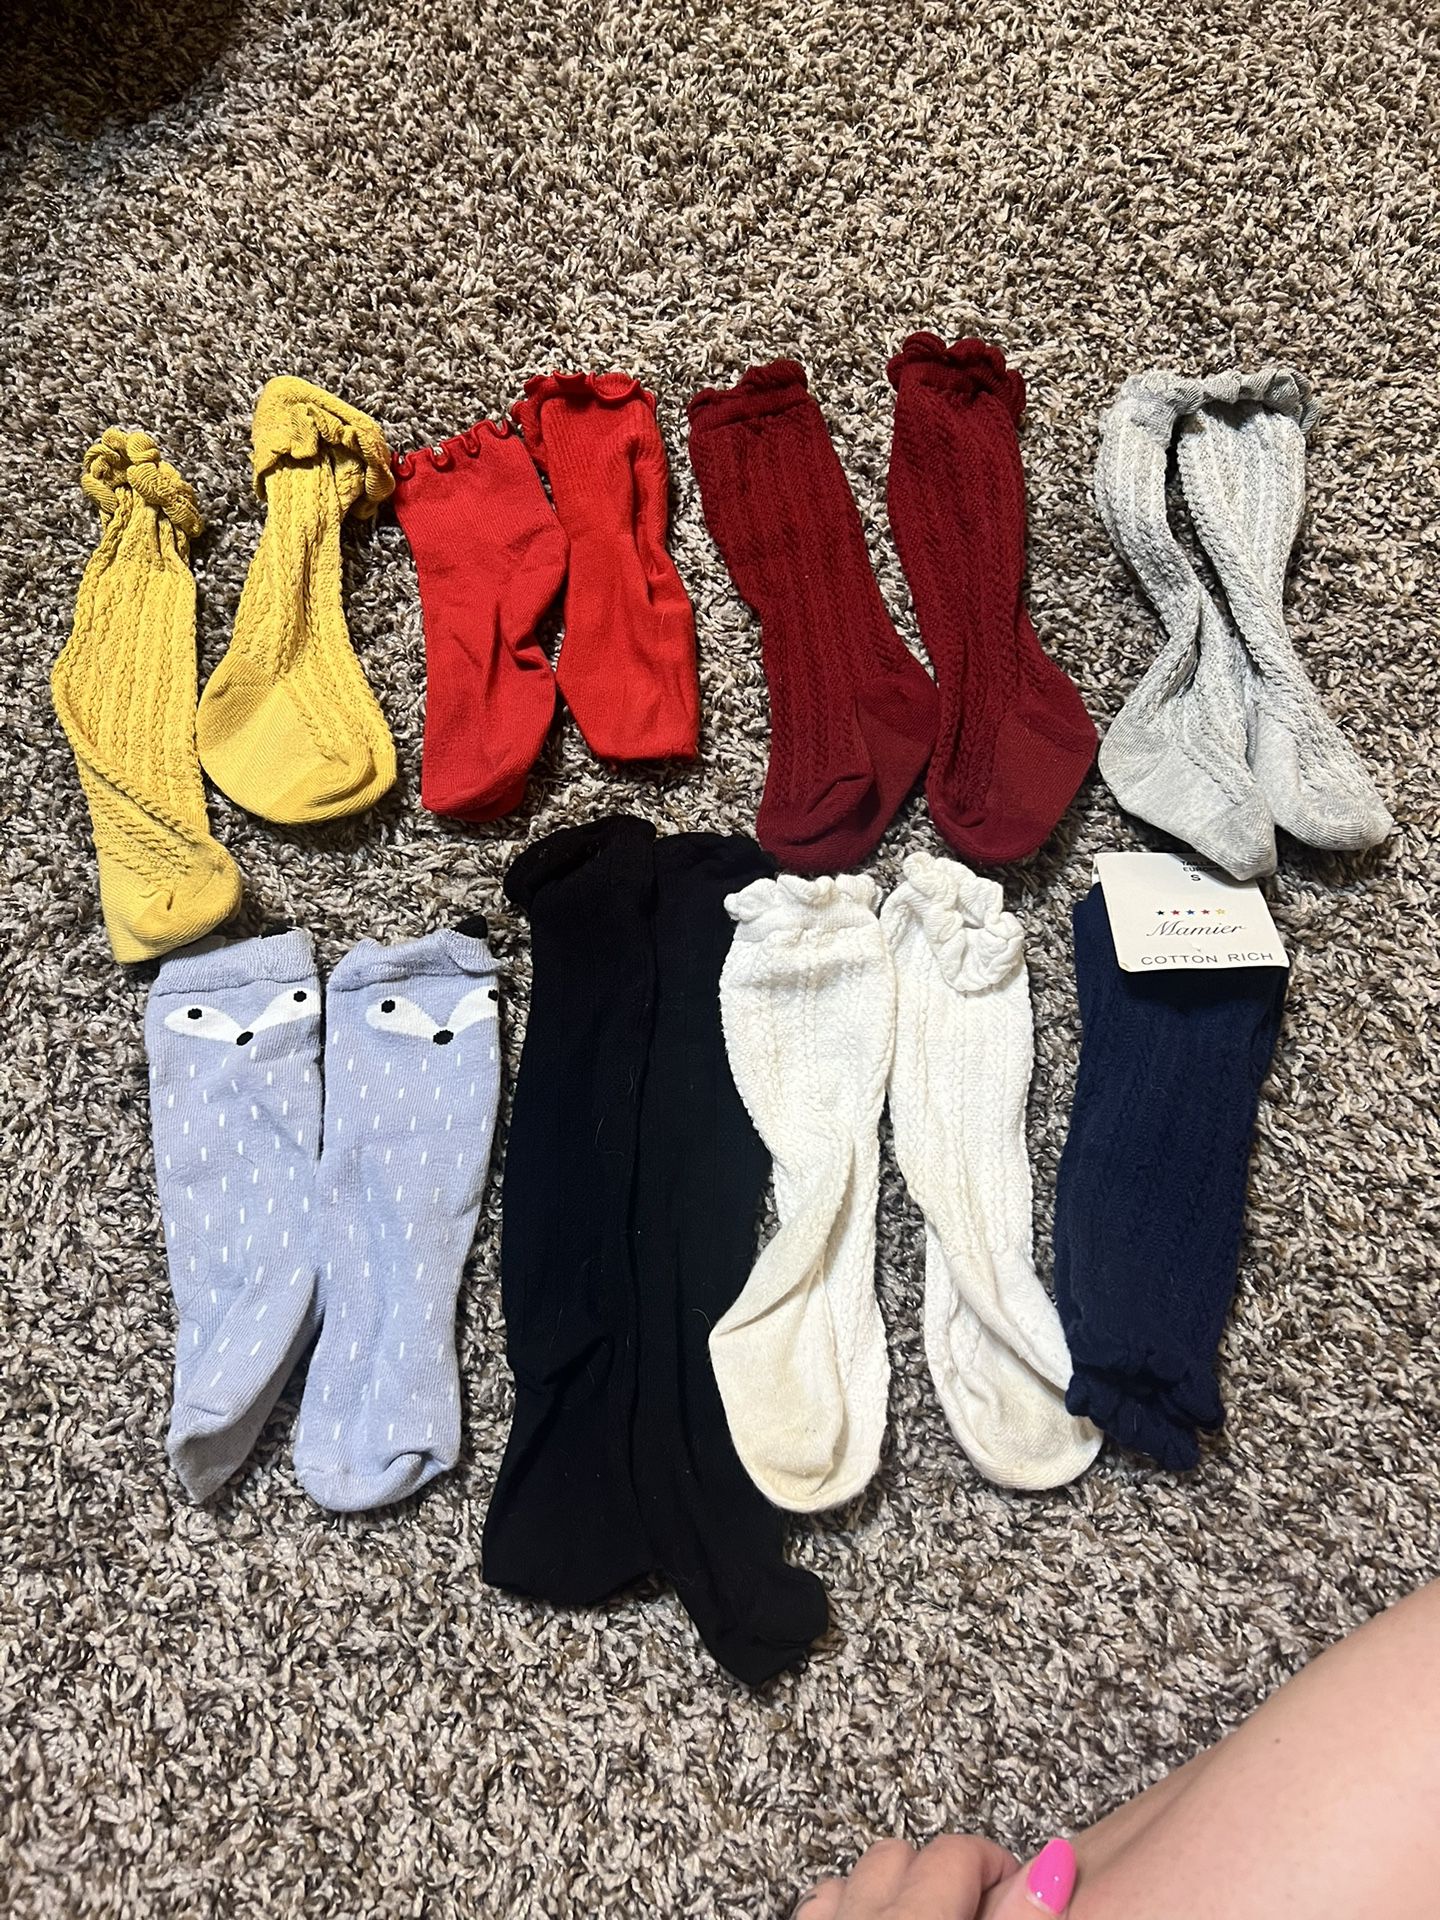 Girl’s knee high socks bundle. Fits Size 6-10 in shoe